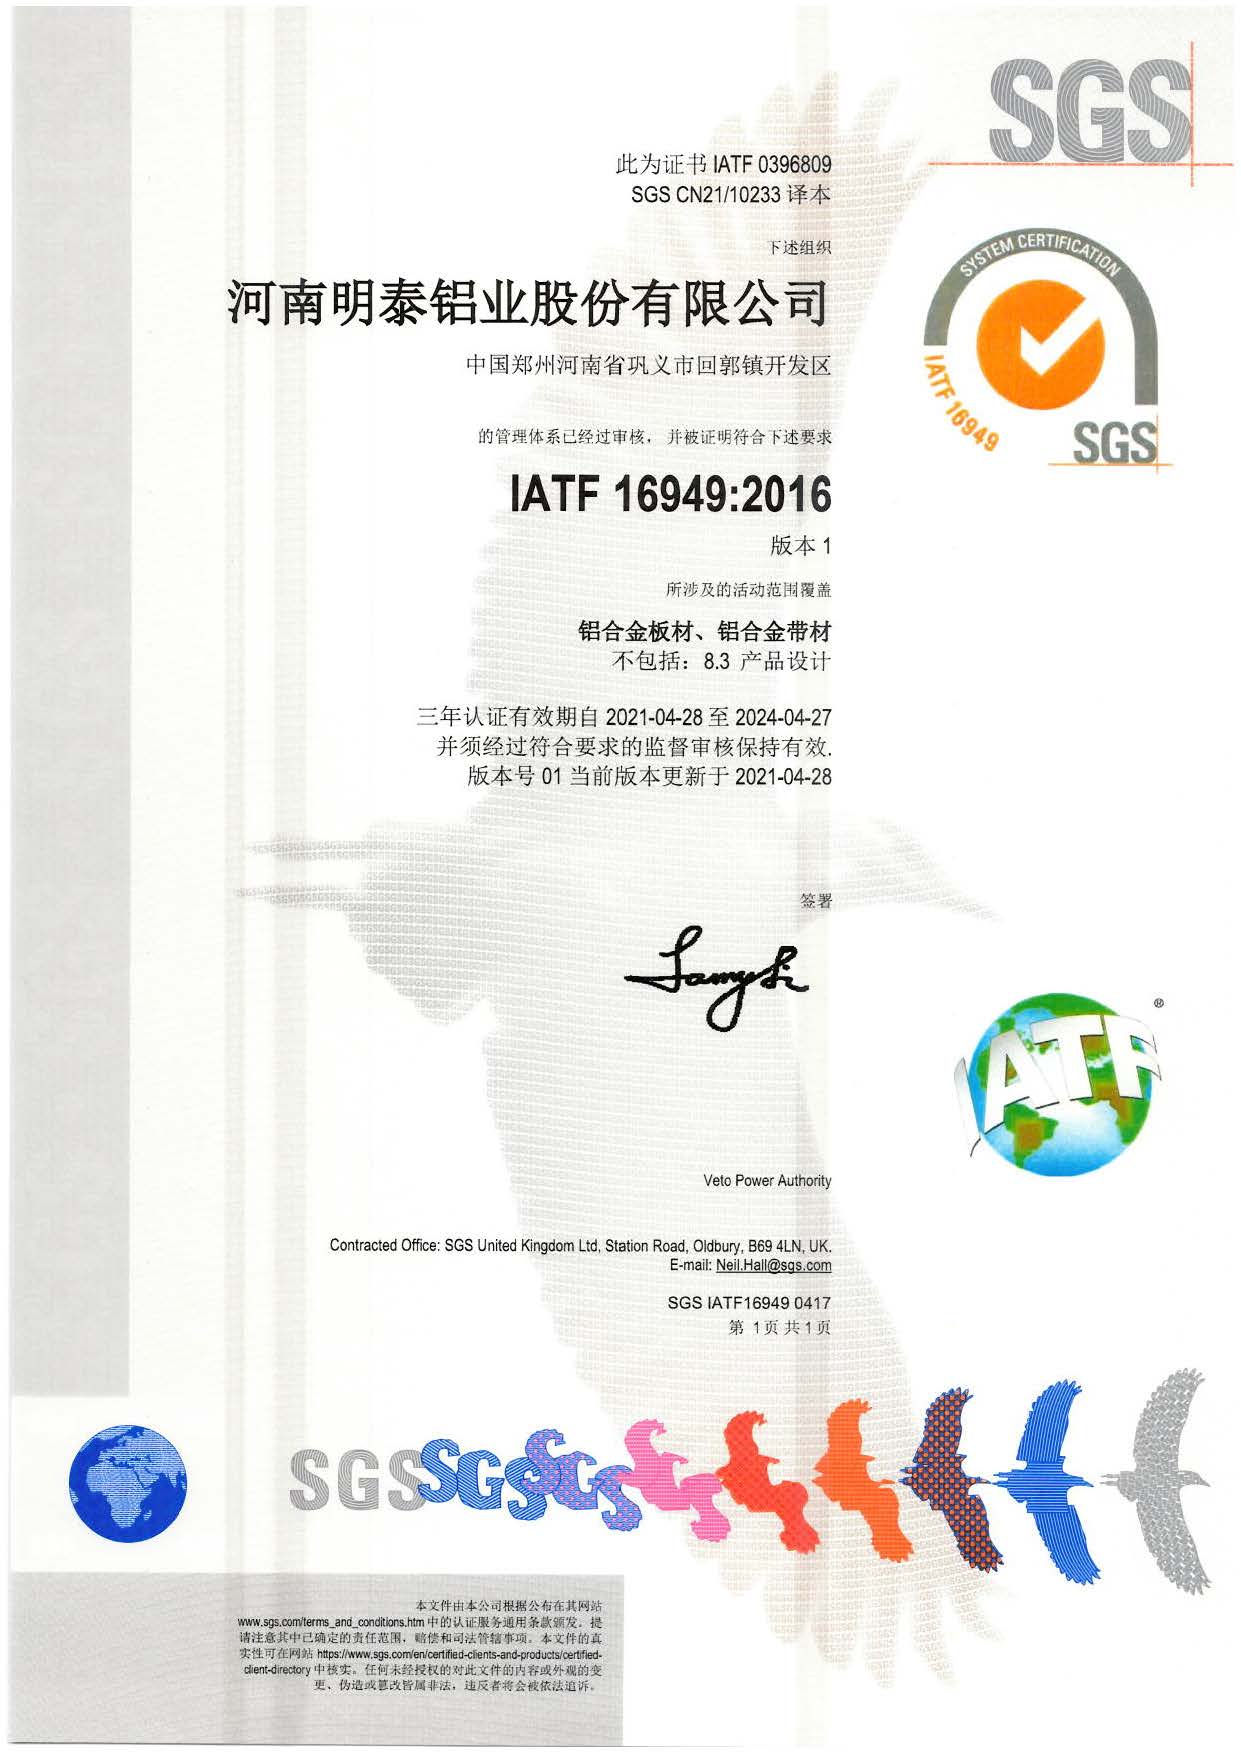 SGS-IATF 16949:2016